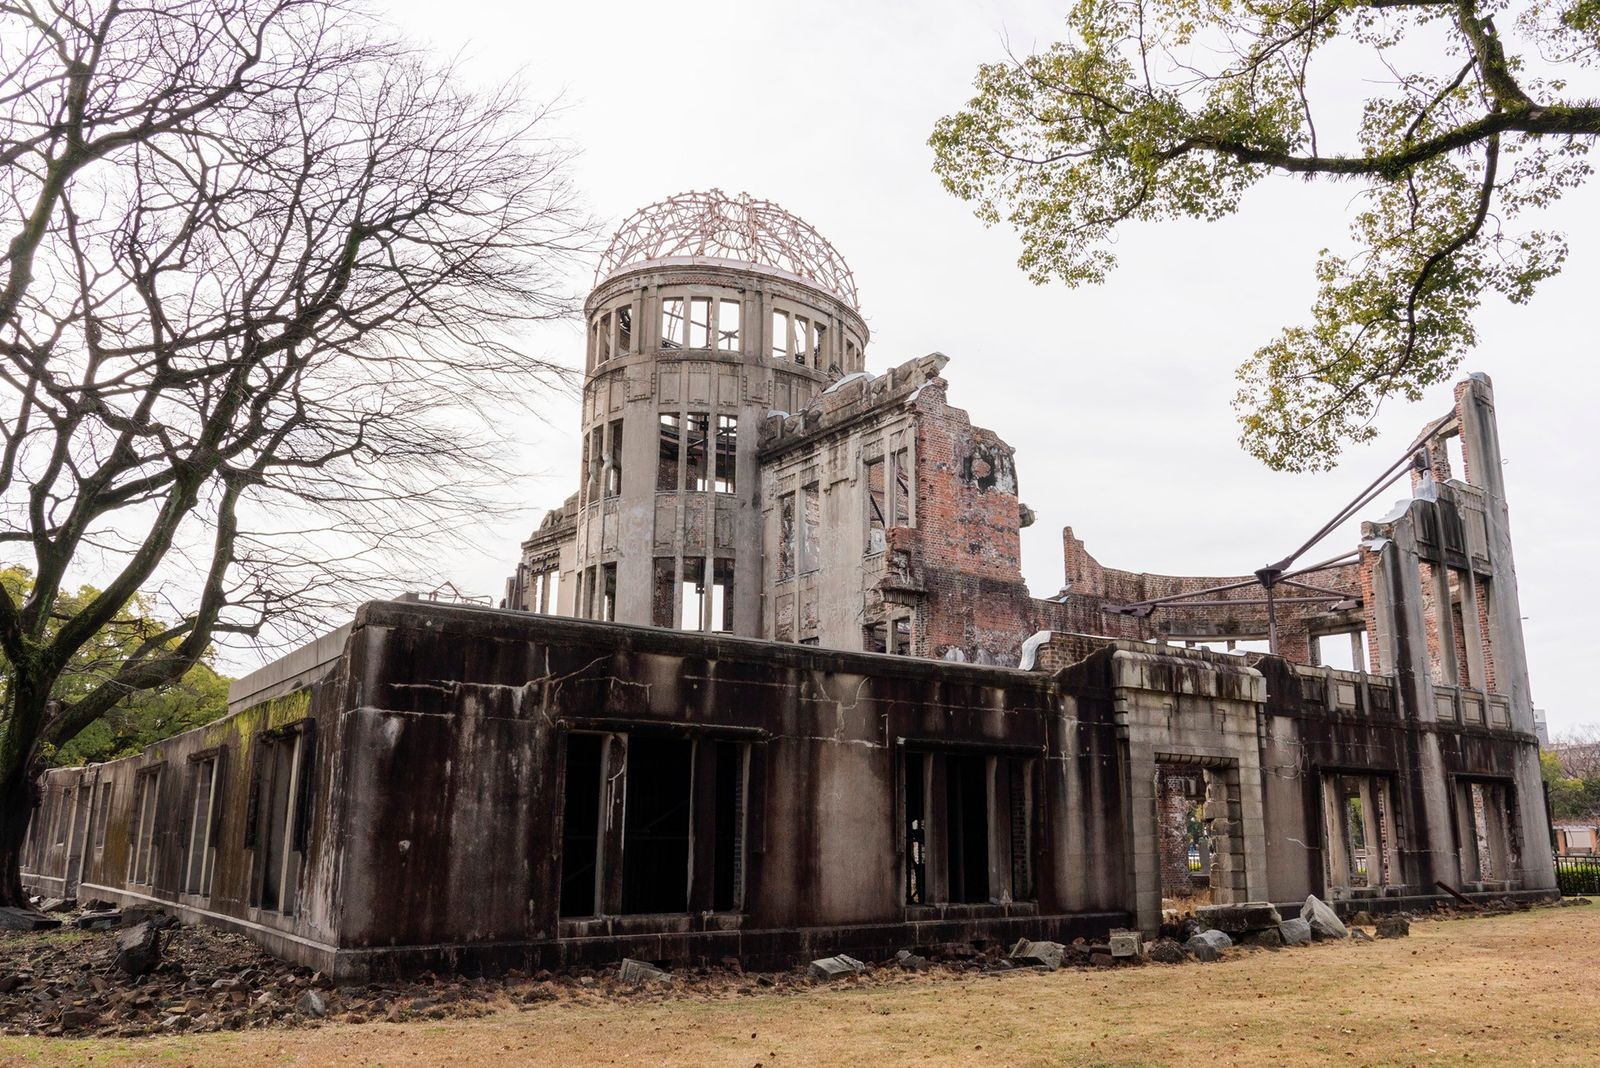 Cidade japonesa de Hiroshima 75 anos após o ataque de bomba atômica (Foto: Hiroki Kobayashi / National Geographic)